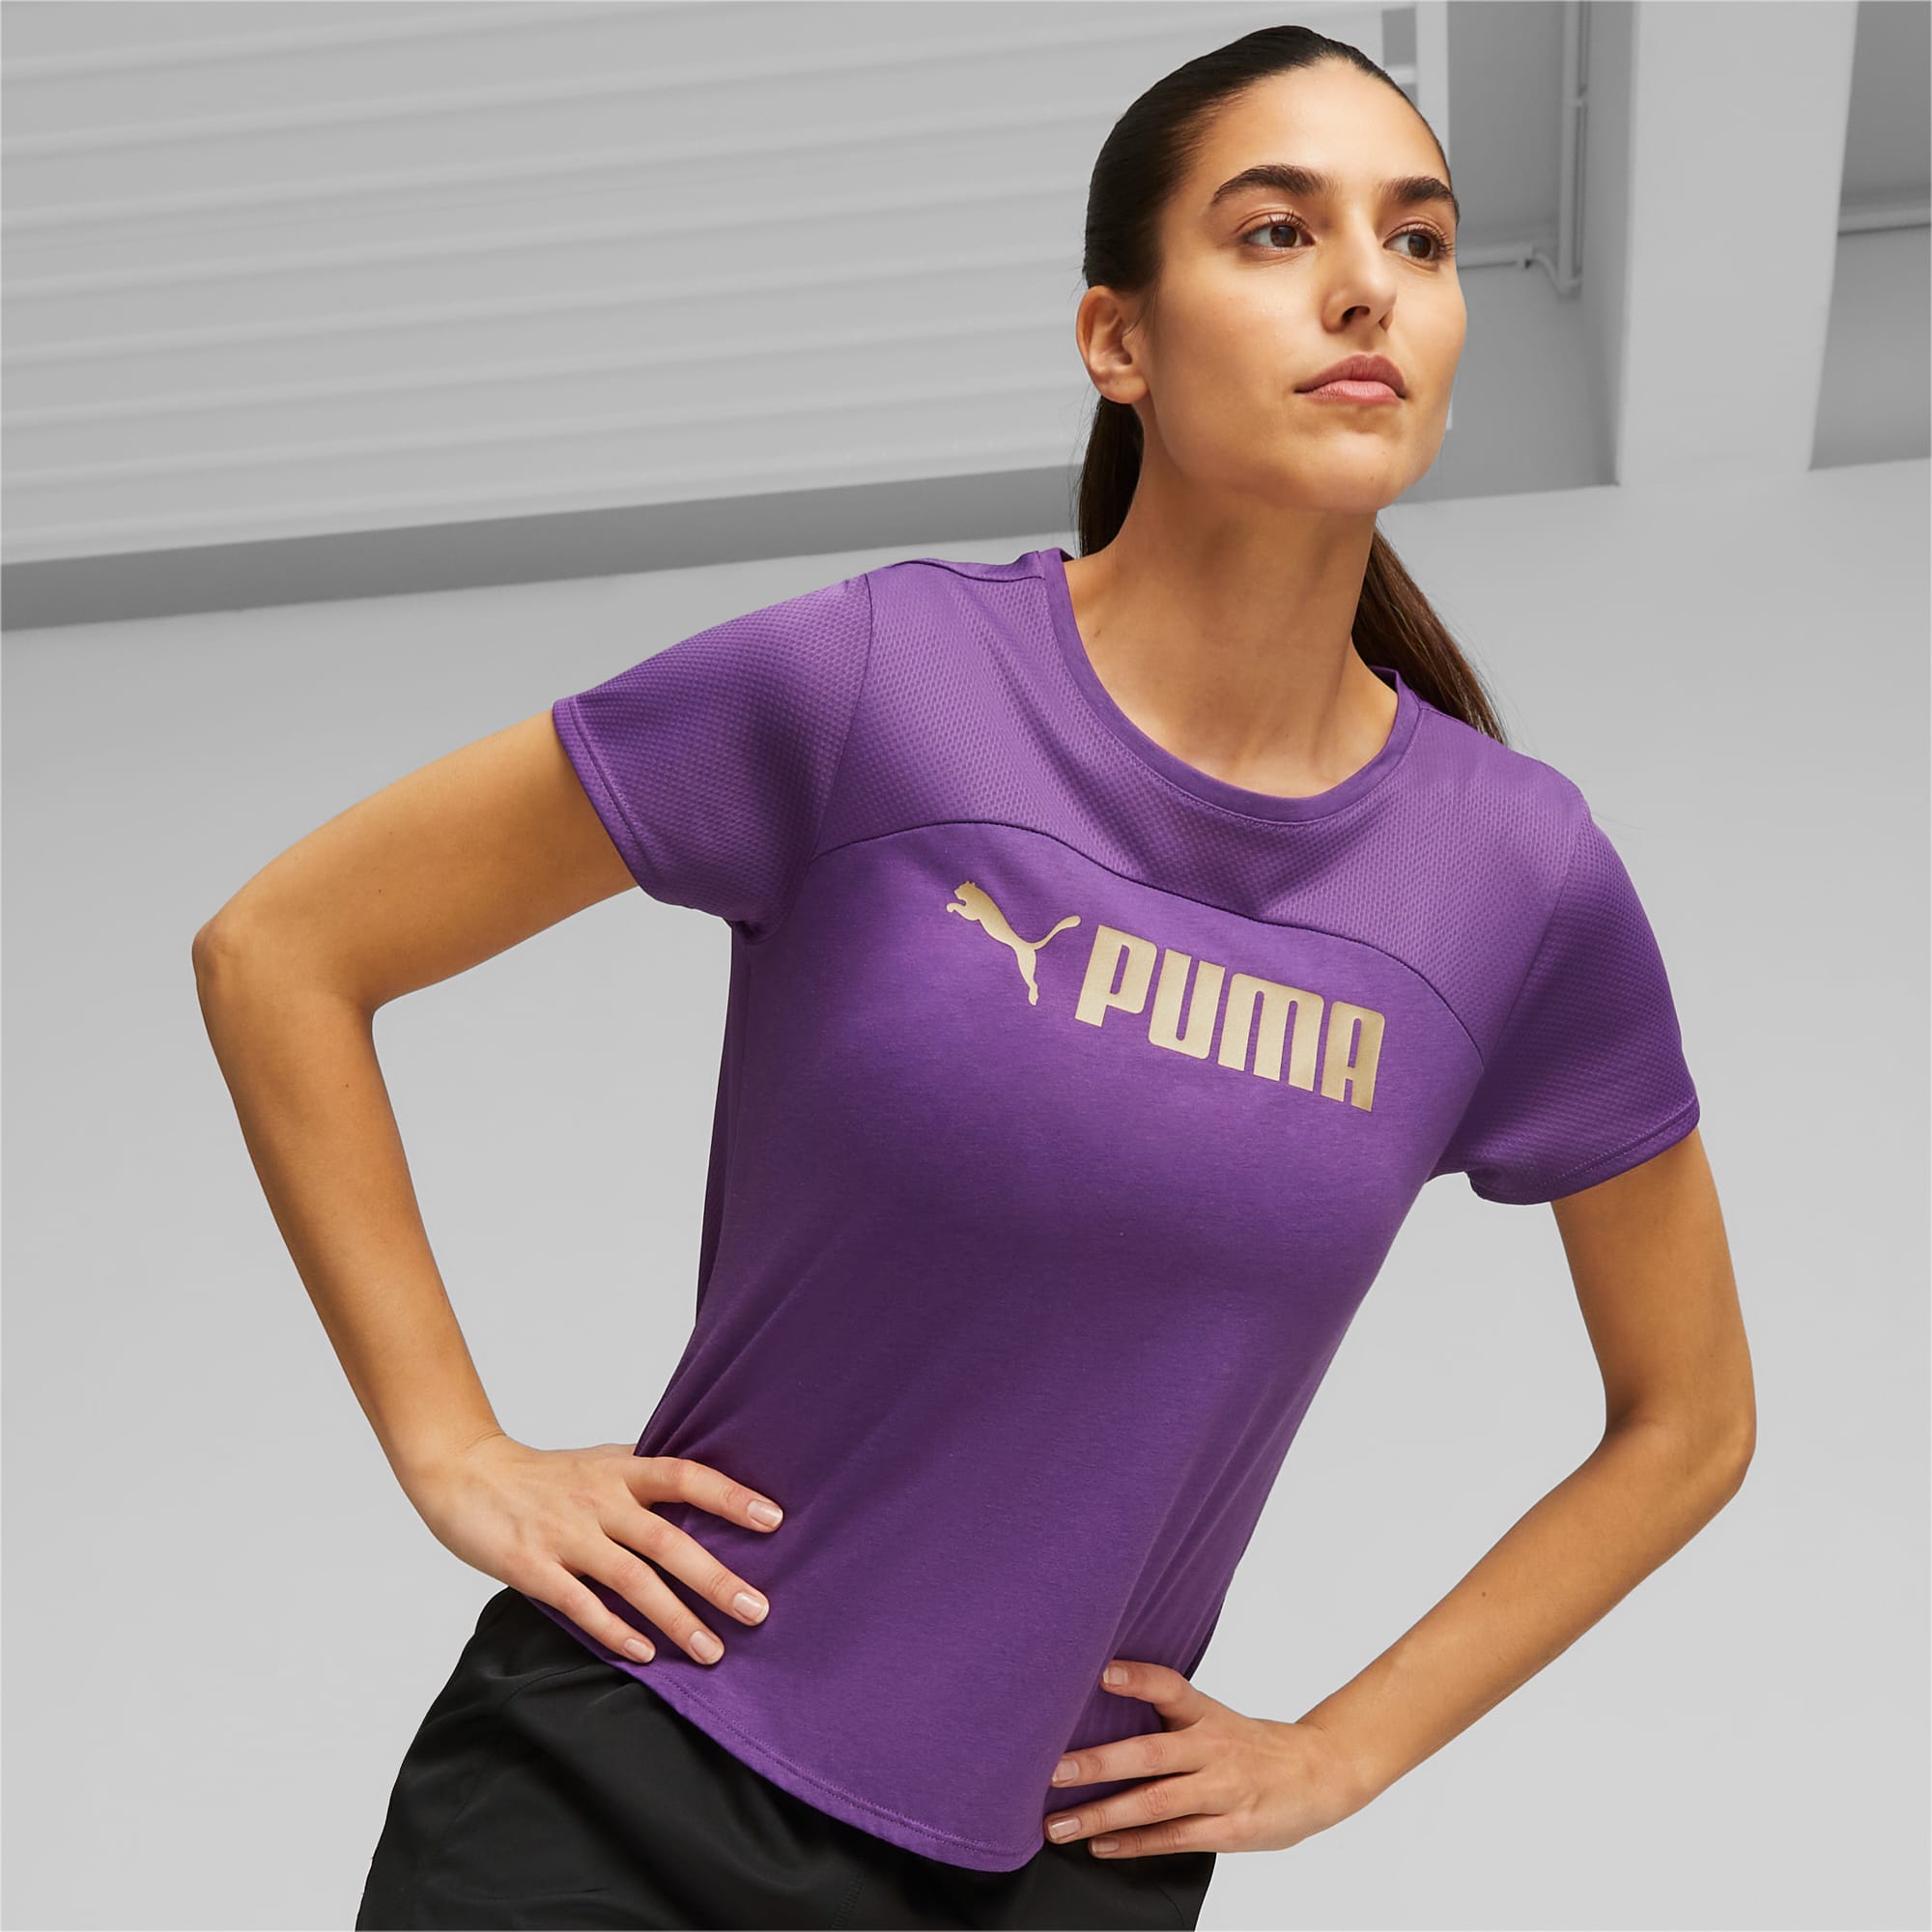 PUMA FIT Ultrabreathe Training T-shirt Voor Dames, Paars/Goud